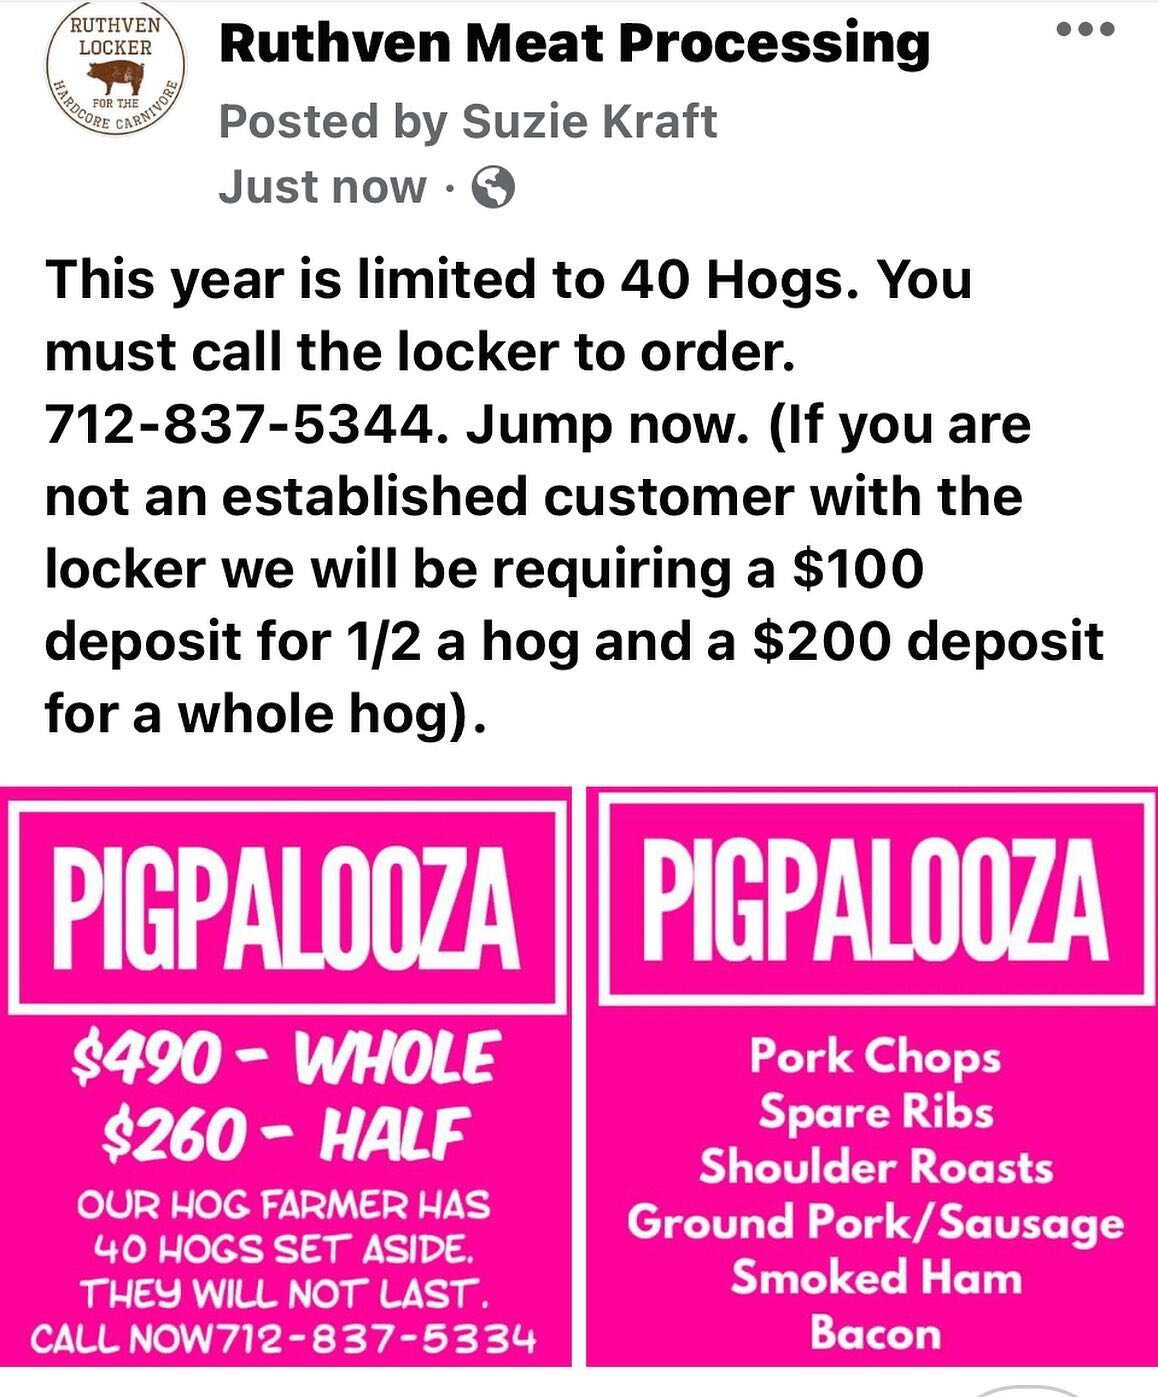 #pigpalooza